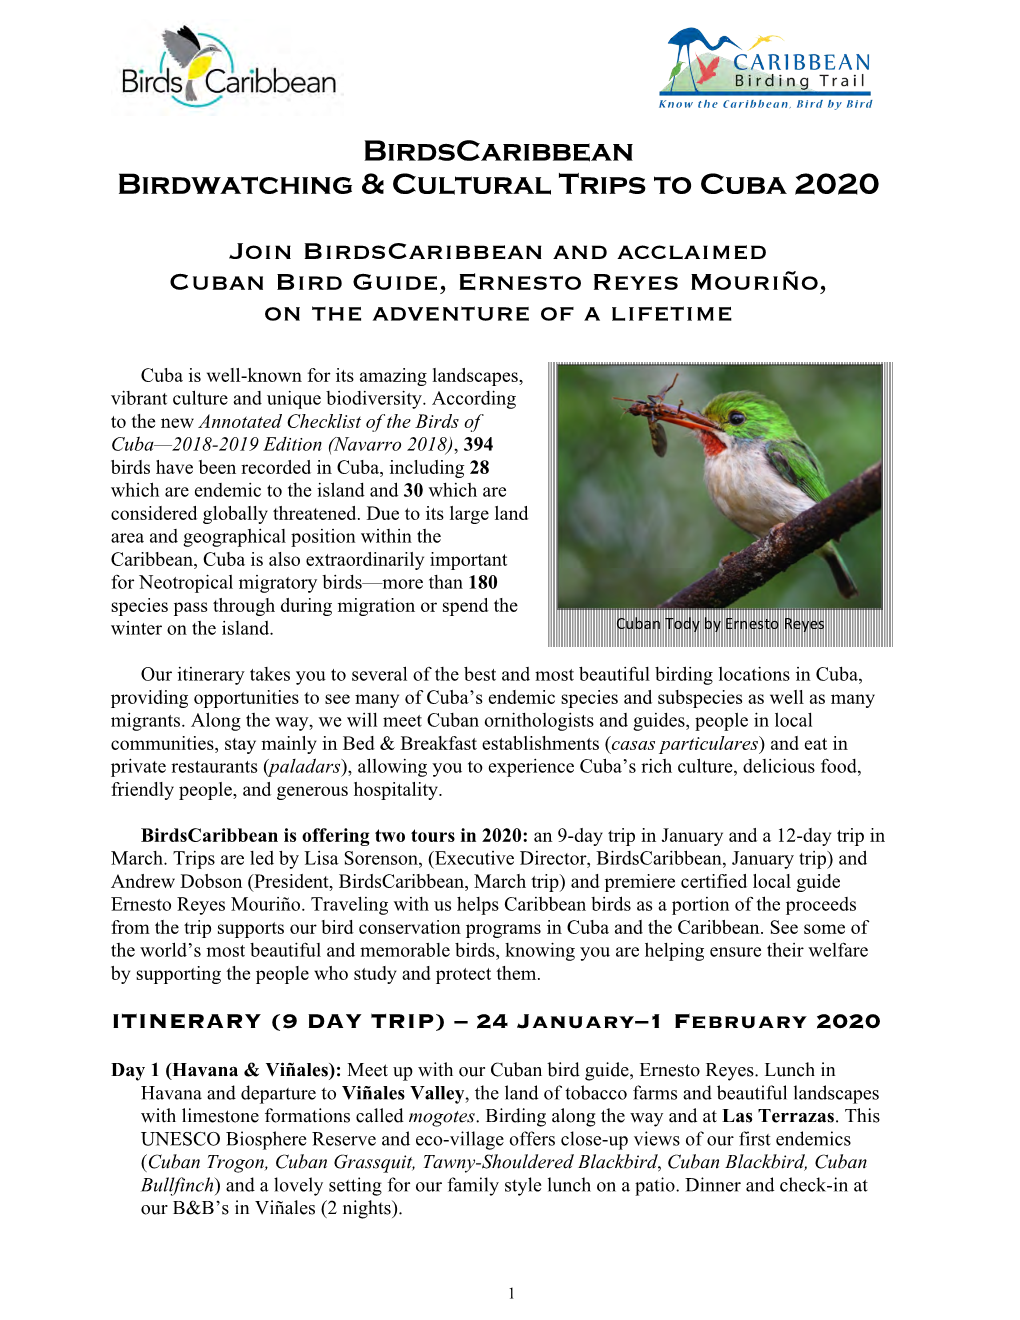 Birdscaribbean Birdwatching & Cultural Trips to Cuba 2020 Join